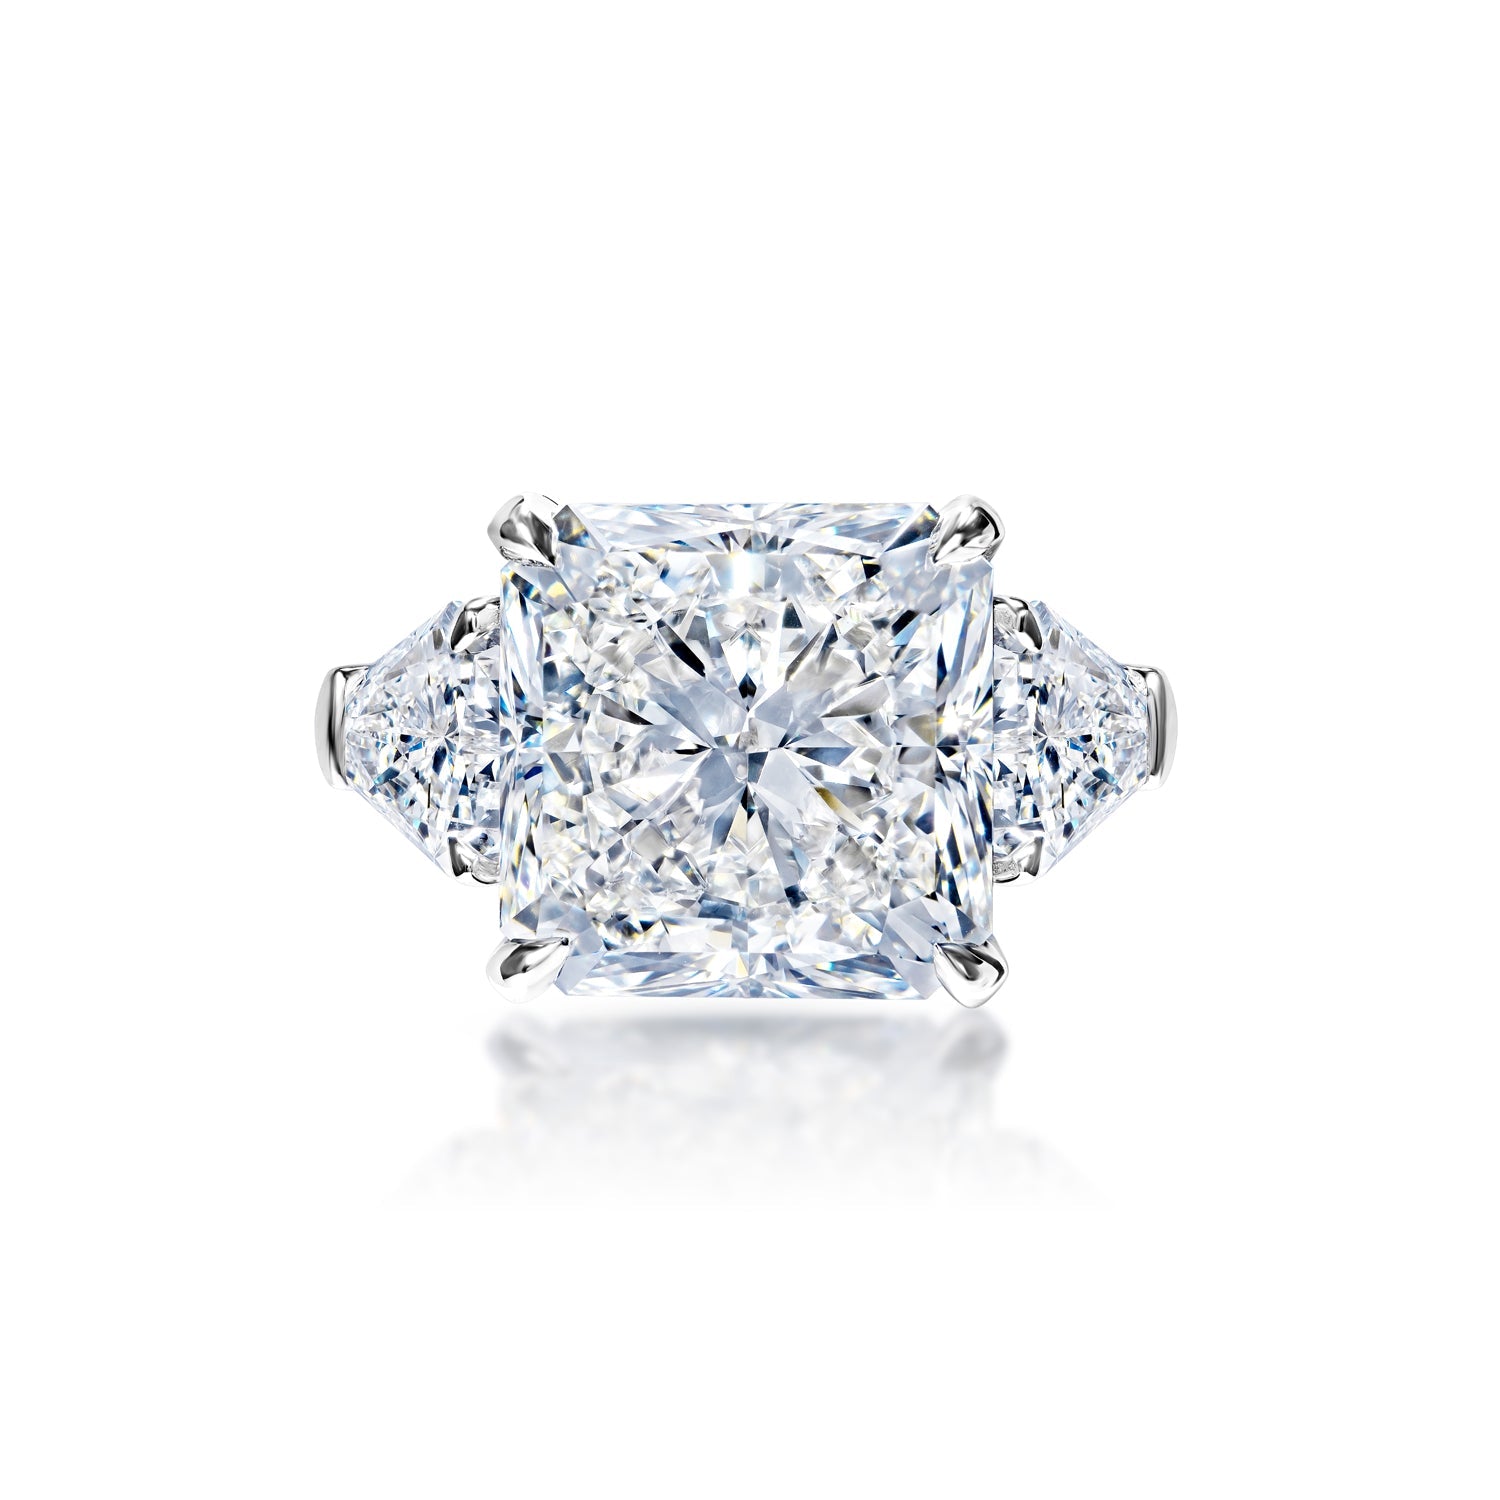 Larine 9 Carat G VS1 Radiant Cut Diamond Engagement Ring in Platinum. IGI Certified Front View